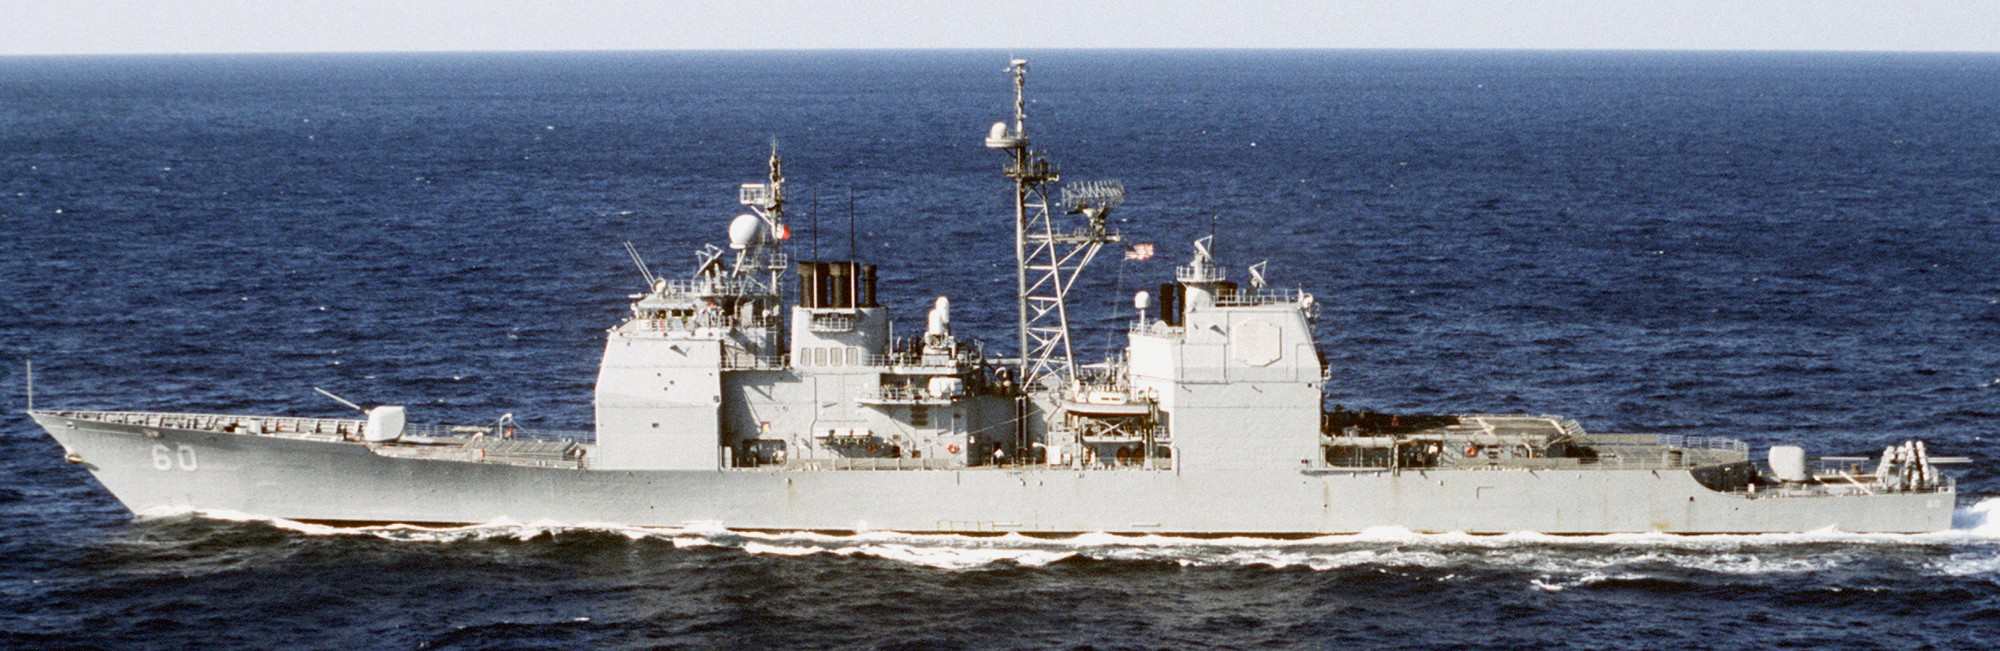 cg-60 uss normandy ticonderoga class guided missile cruiser aegis us navy adriatic sea 131